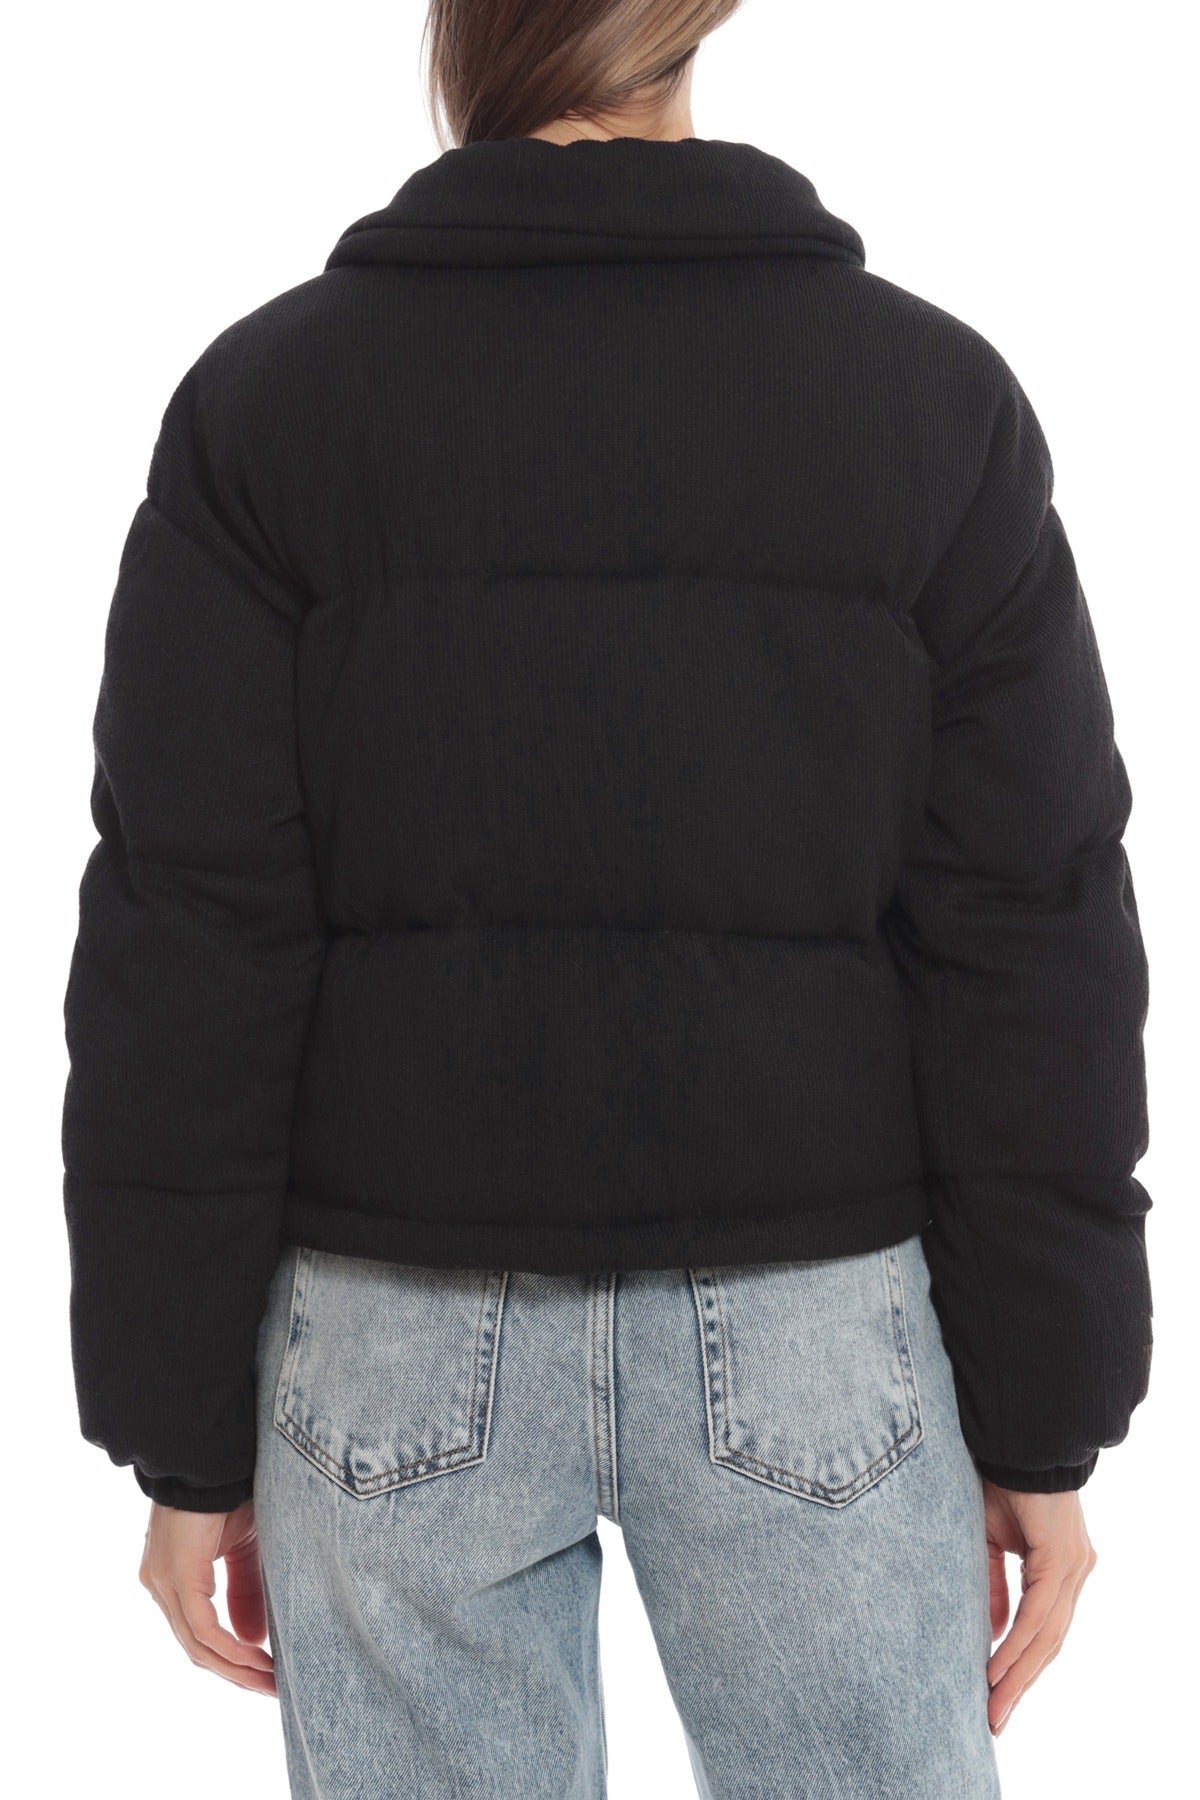 Black Puffer Jacket by Bagatelle for women outerwear coats